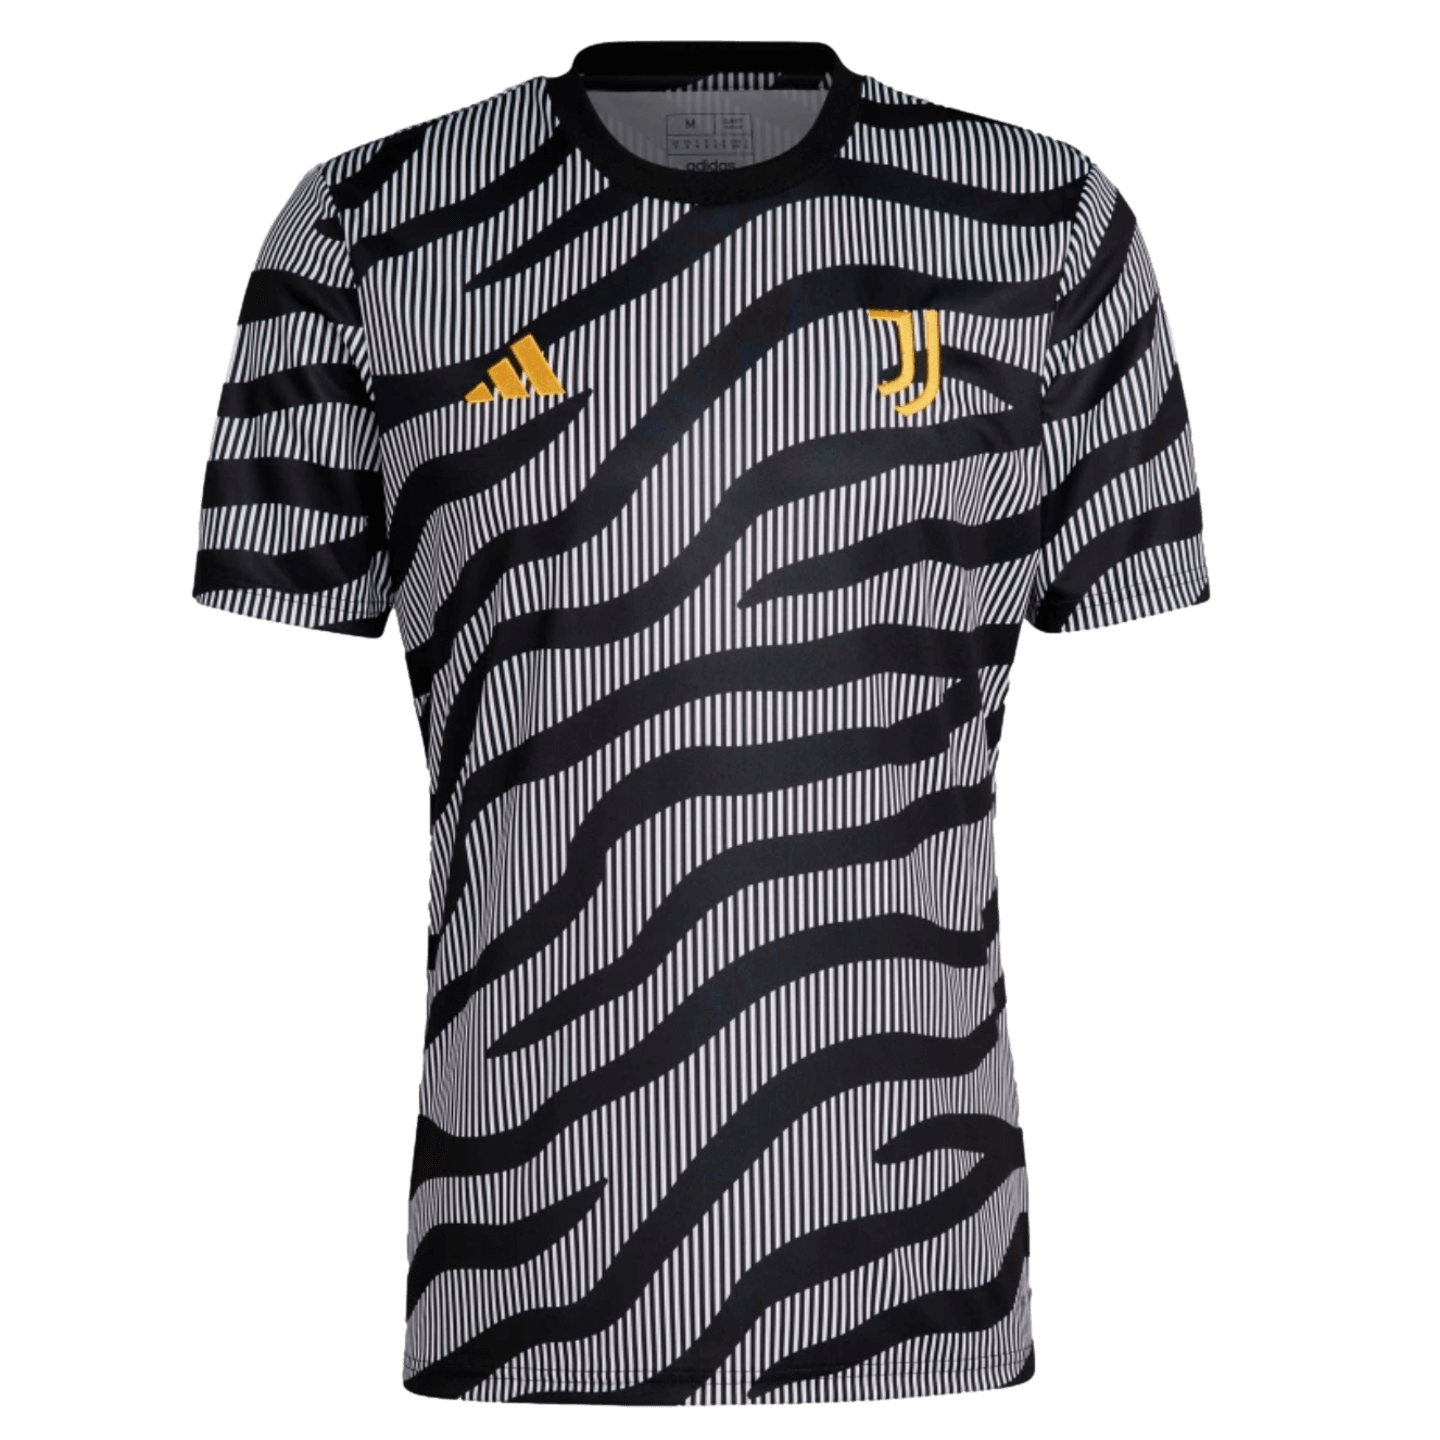 Adidas Juventus Pre-Match Jersey